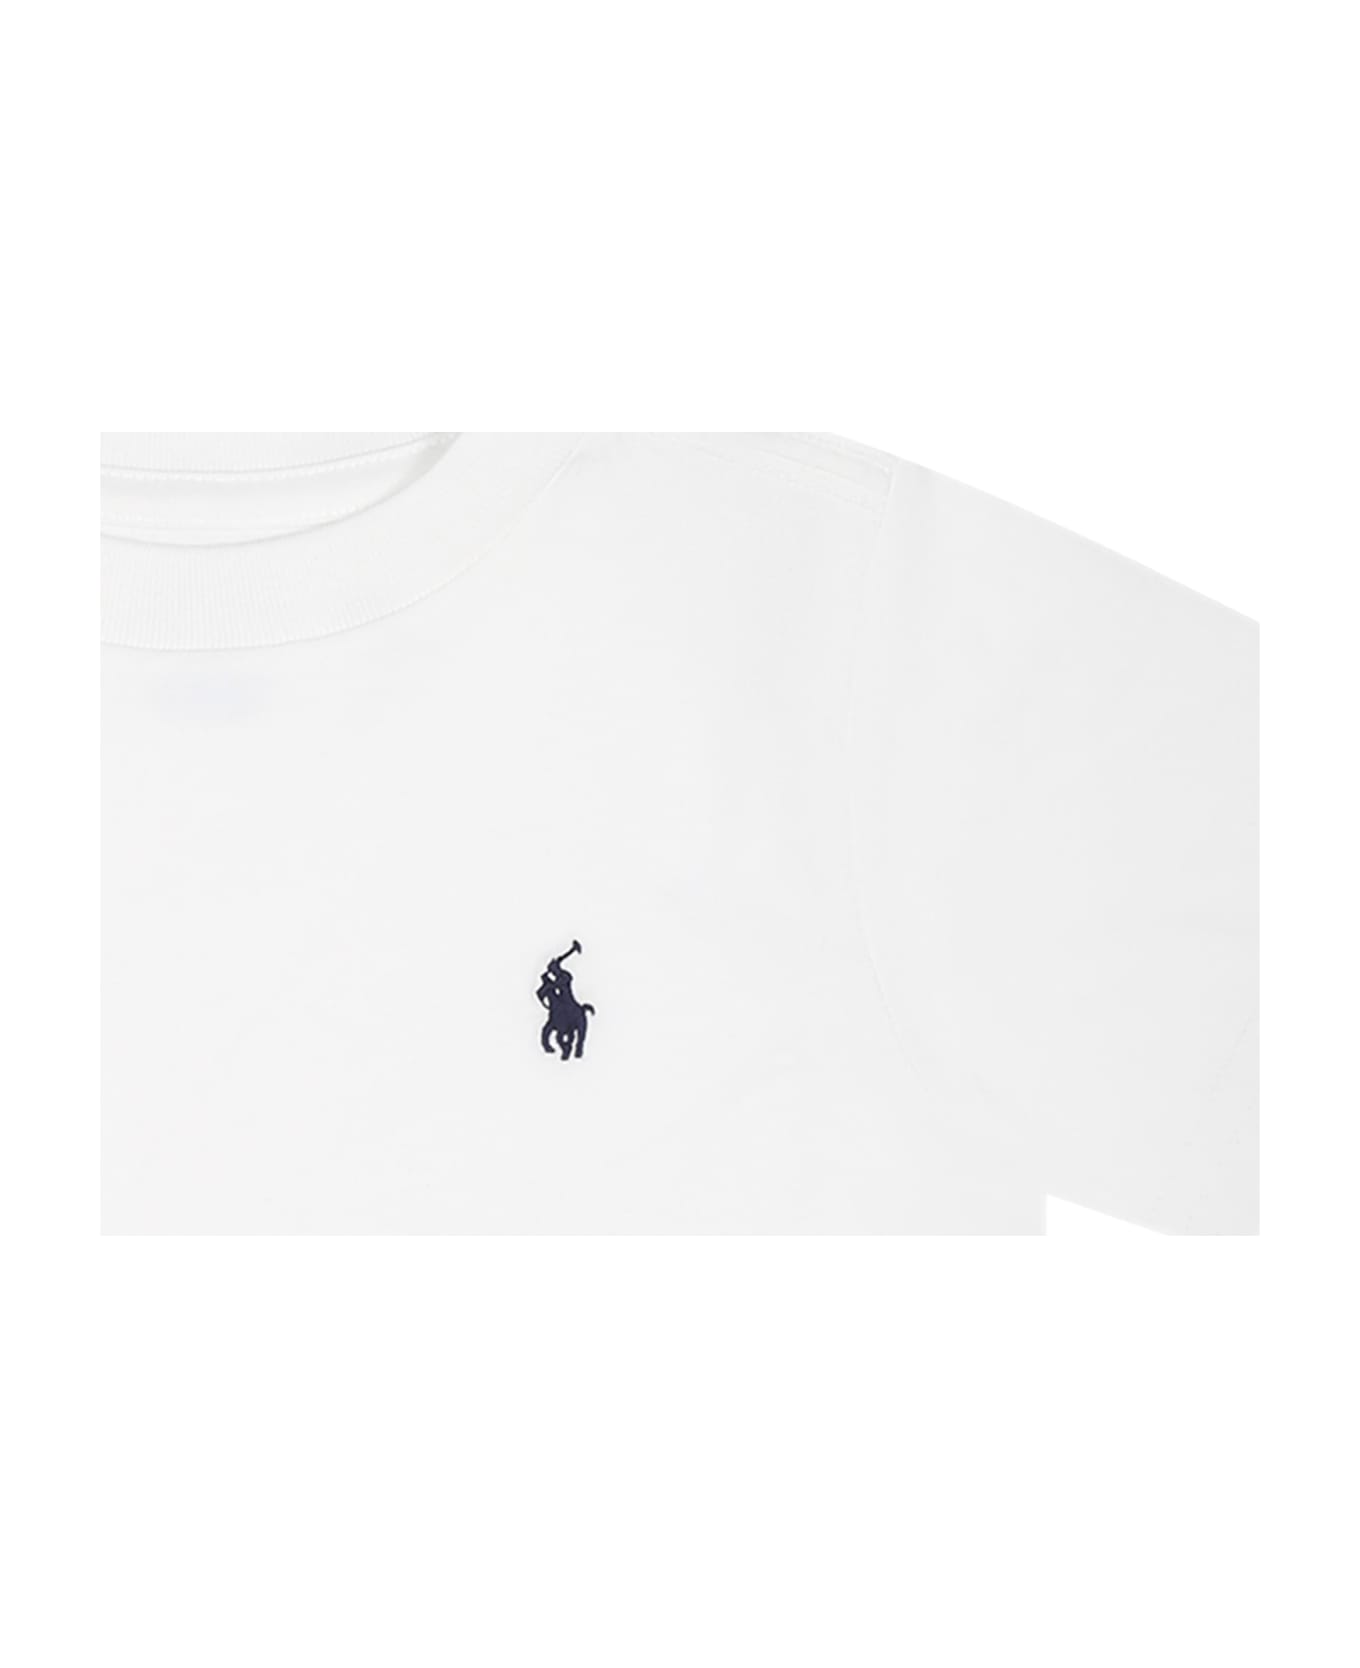 Ralph Lauren White T-shirt For Boy With Pony Logo - White